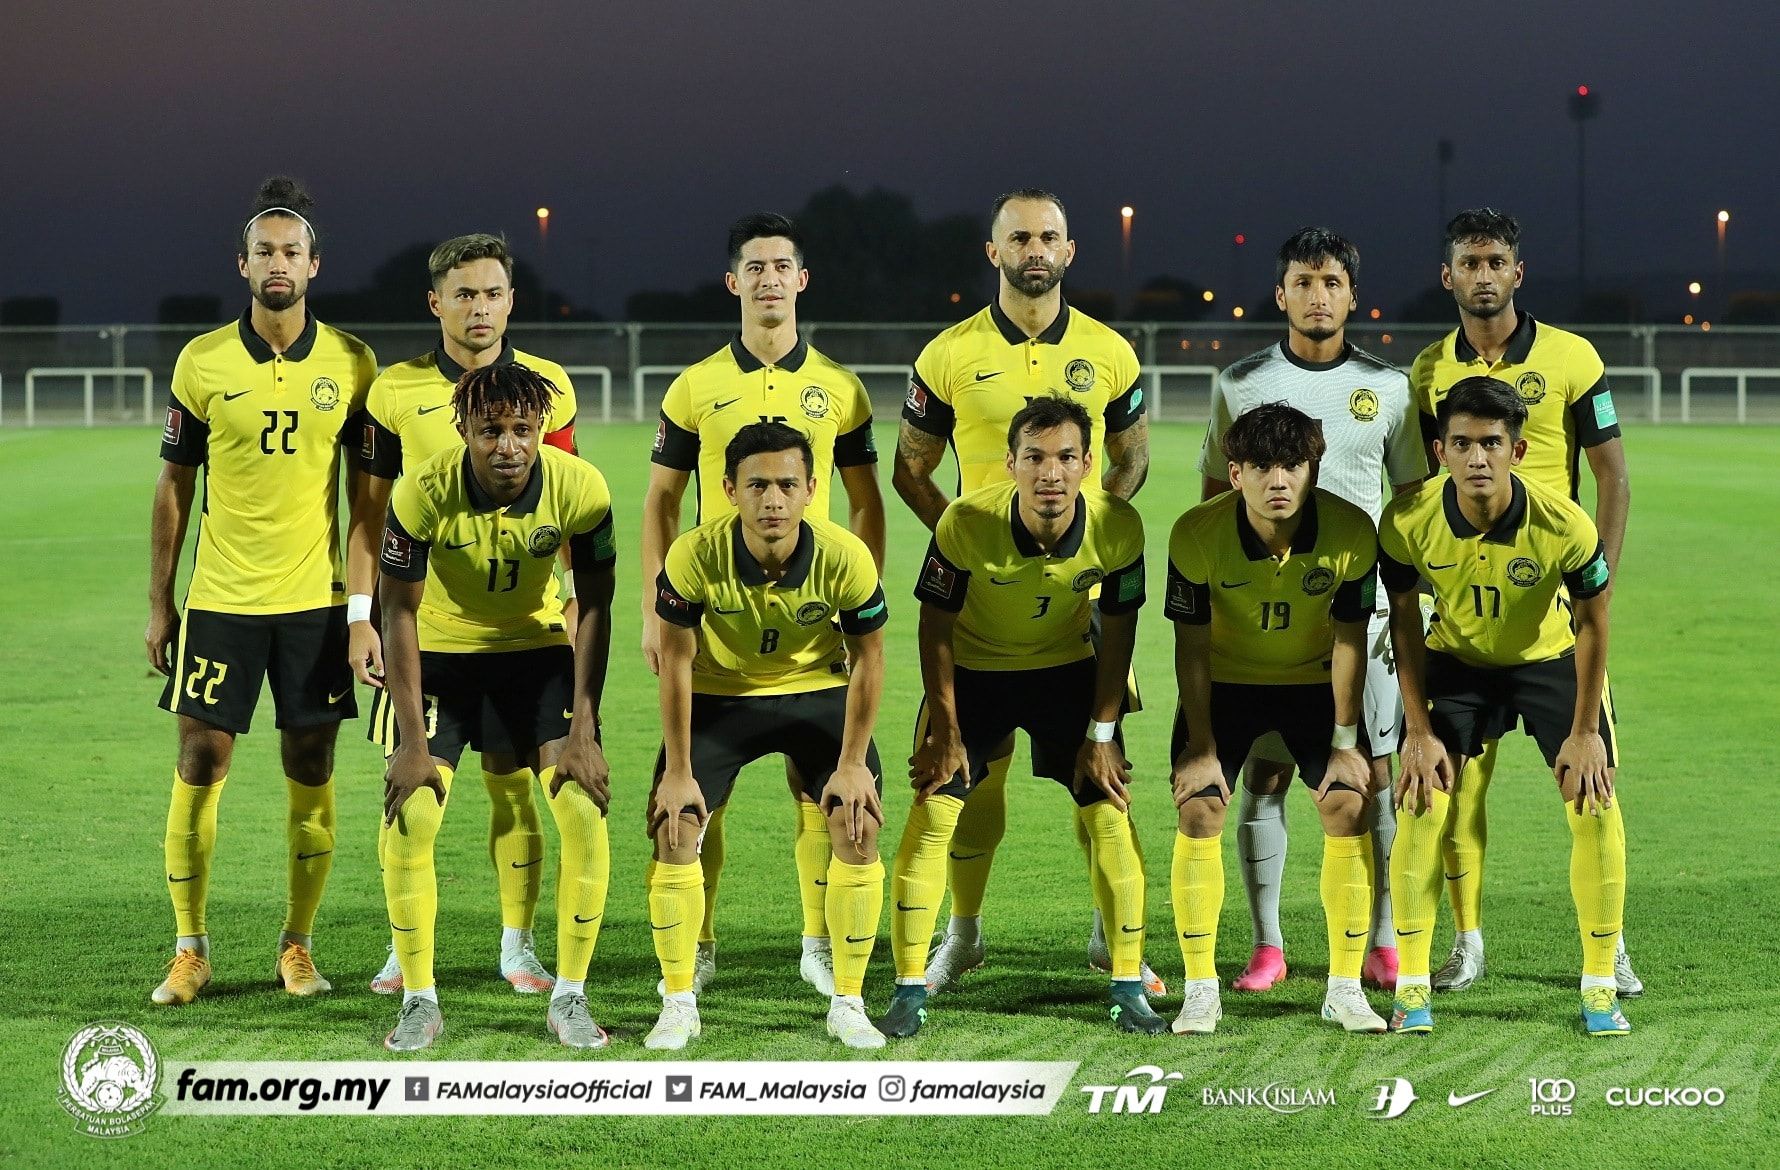 Starter timnas Malaysia saat bersua timnas Kuwait dalam laga persahabatan di 7he Seven Stadium, Dubai, 23 Mei 2021.